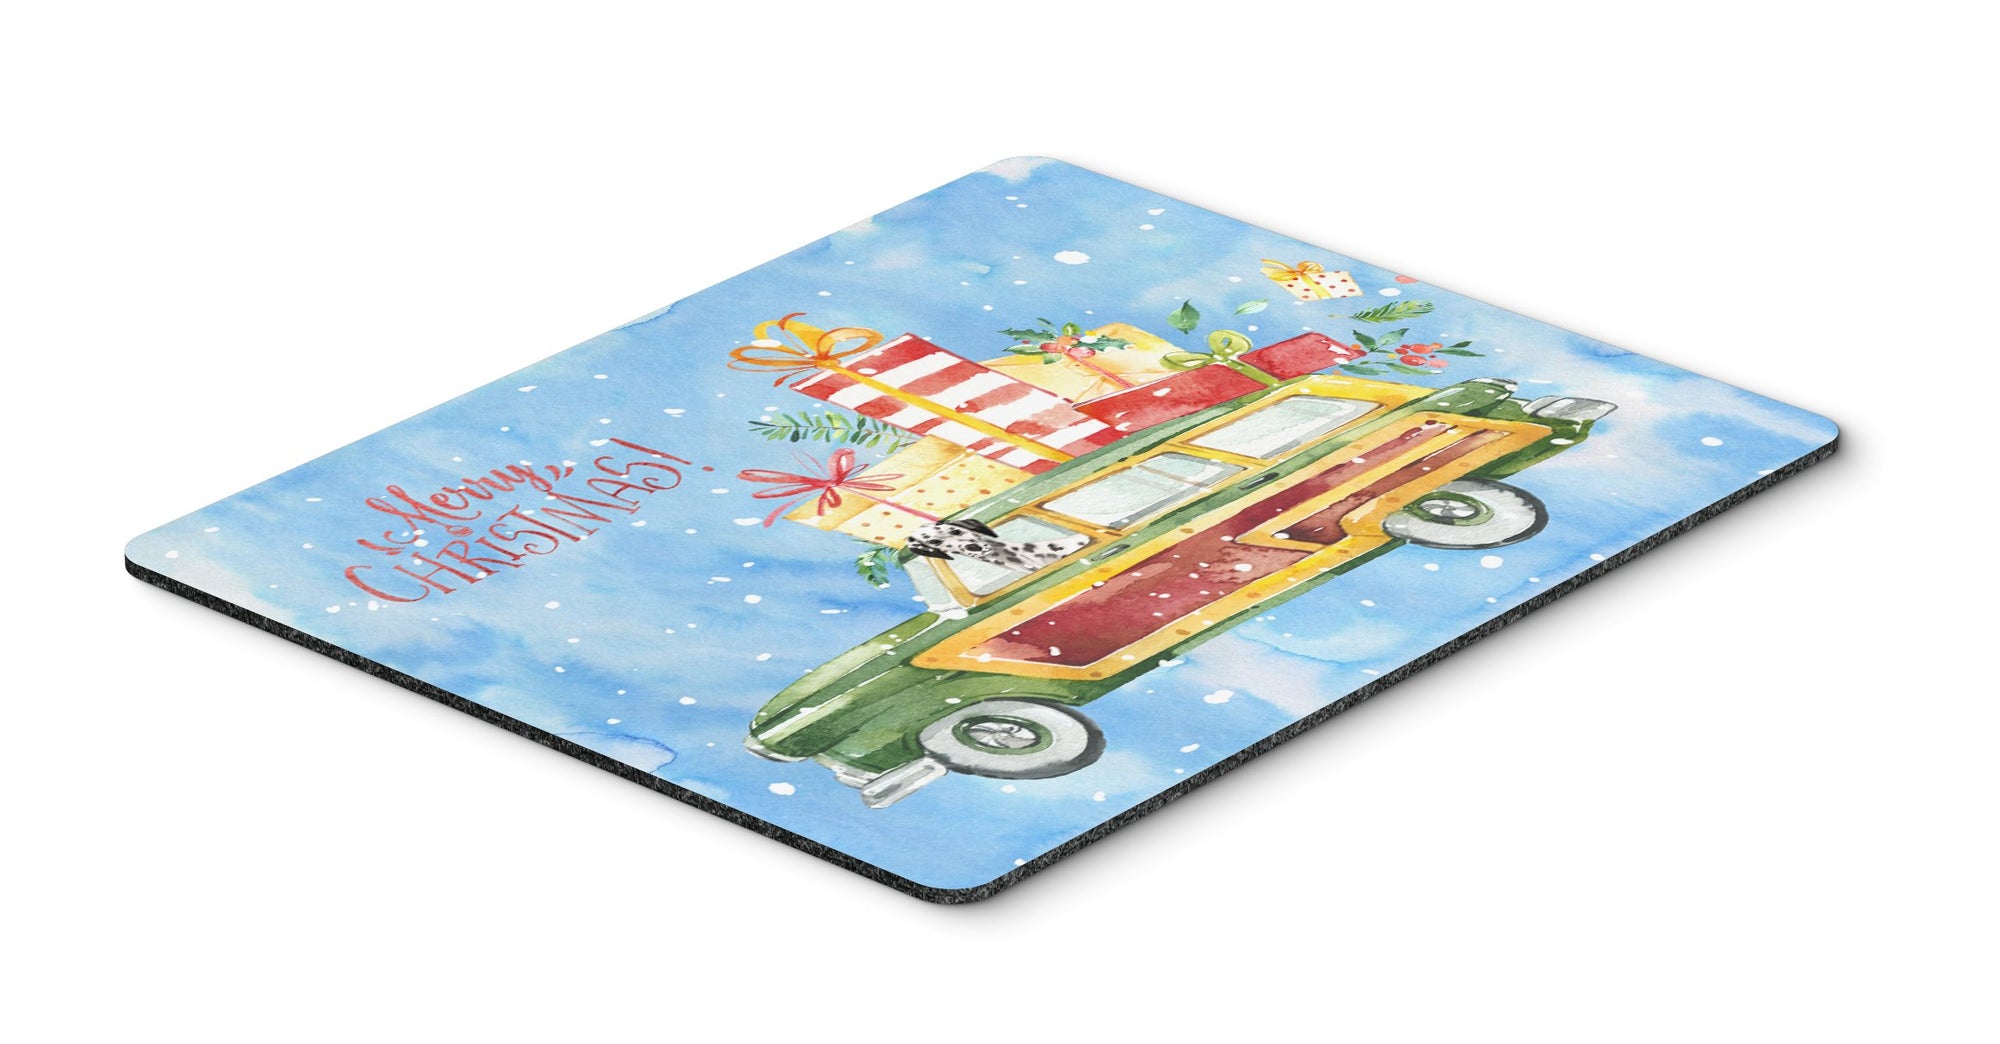 Merry Christmas Dalmatian Mouse Pad, Hot Pad or Trivet CK2452MP by Caroline's Treasures